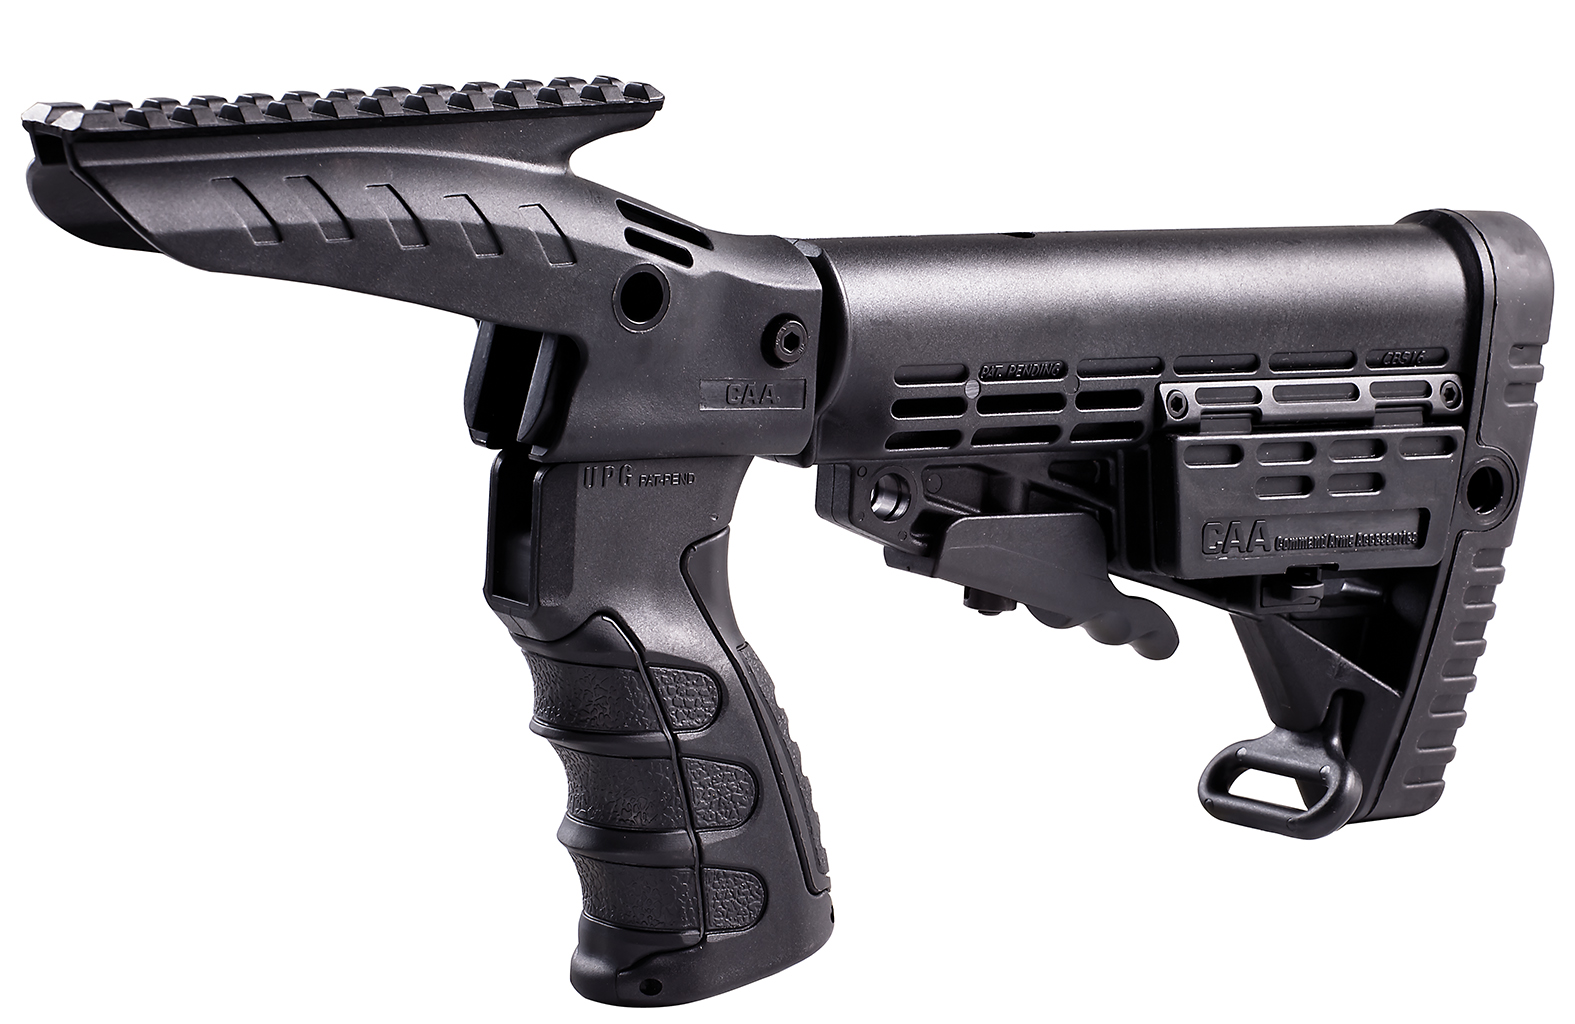 Escopeta Remington 870 c/pistol grip cal. 12 UAB - Triestina